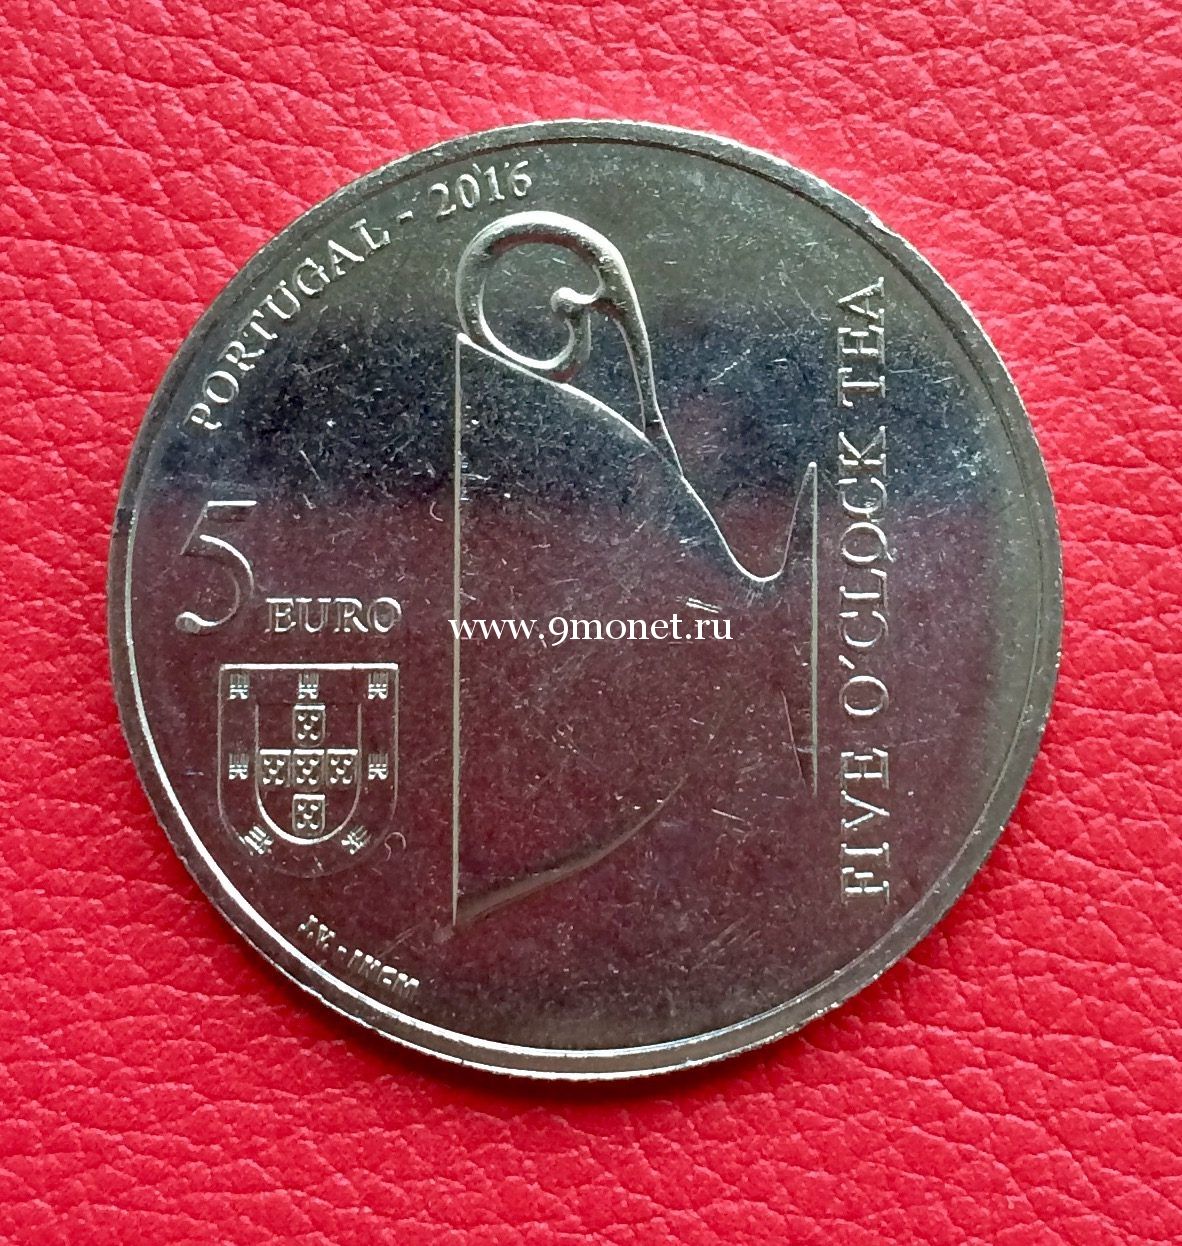 Монета 5 Евро Португалия 2016 года. Екатерина Брагансская.